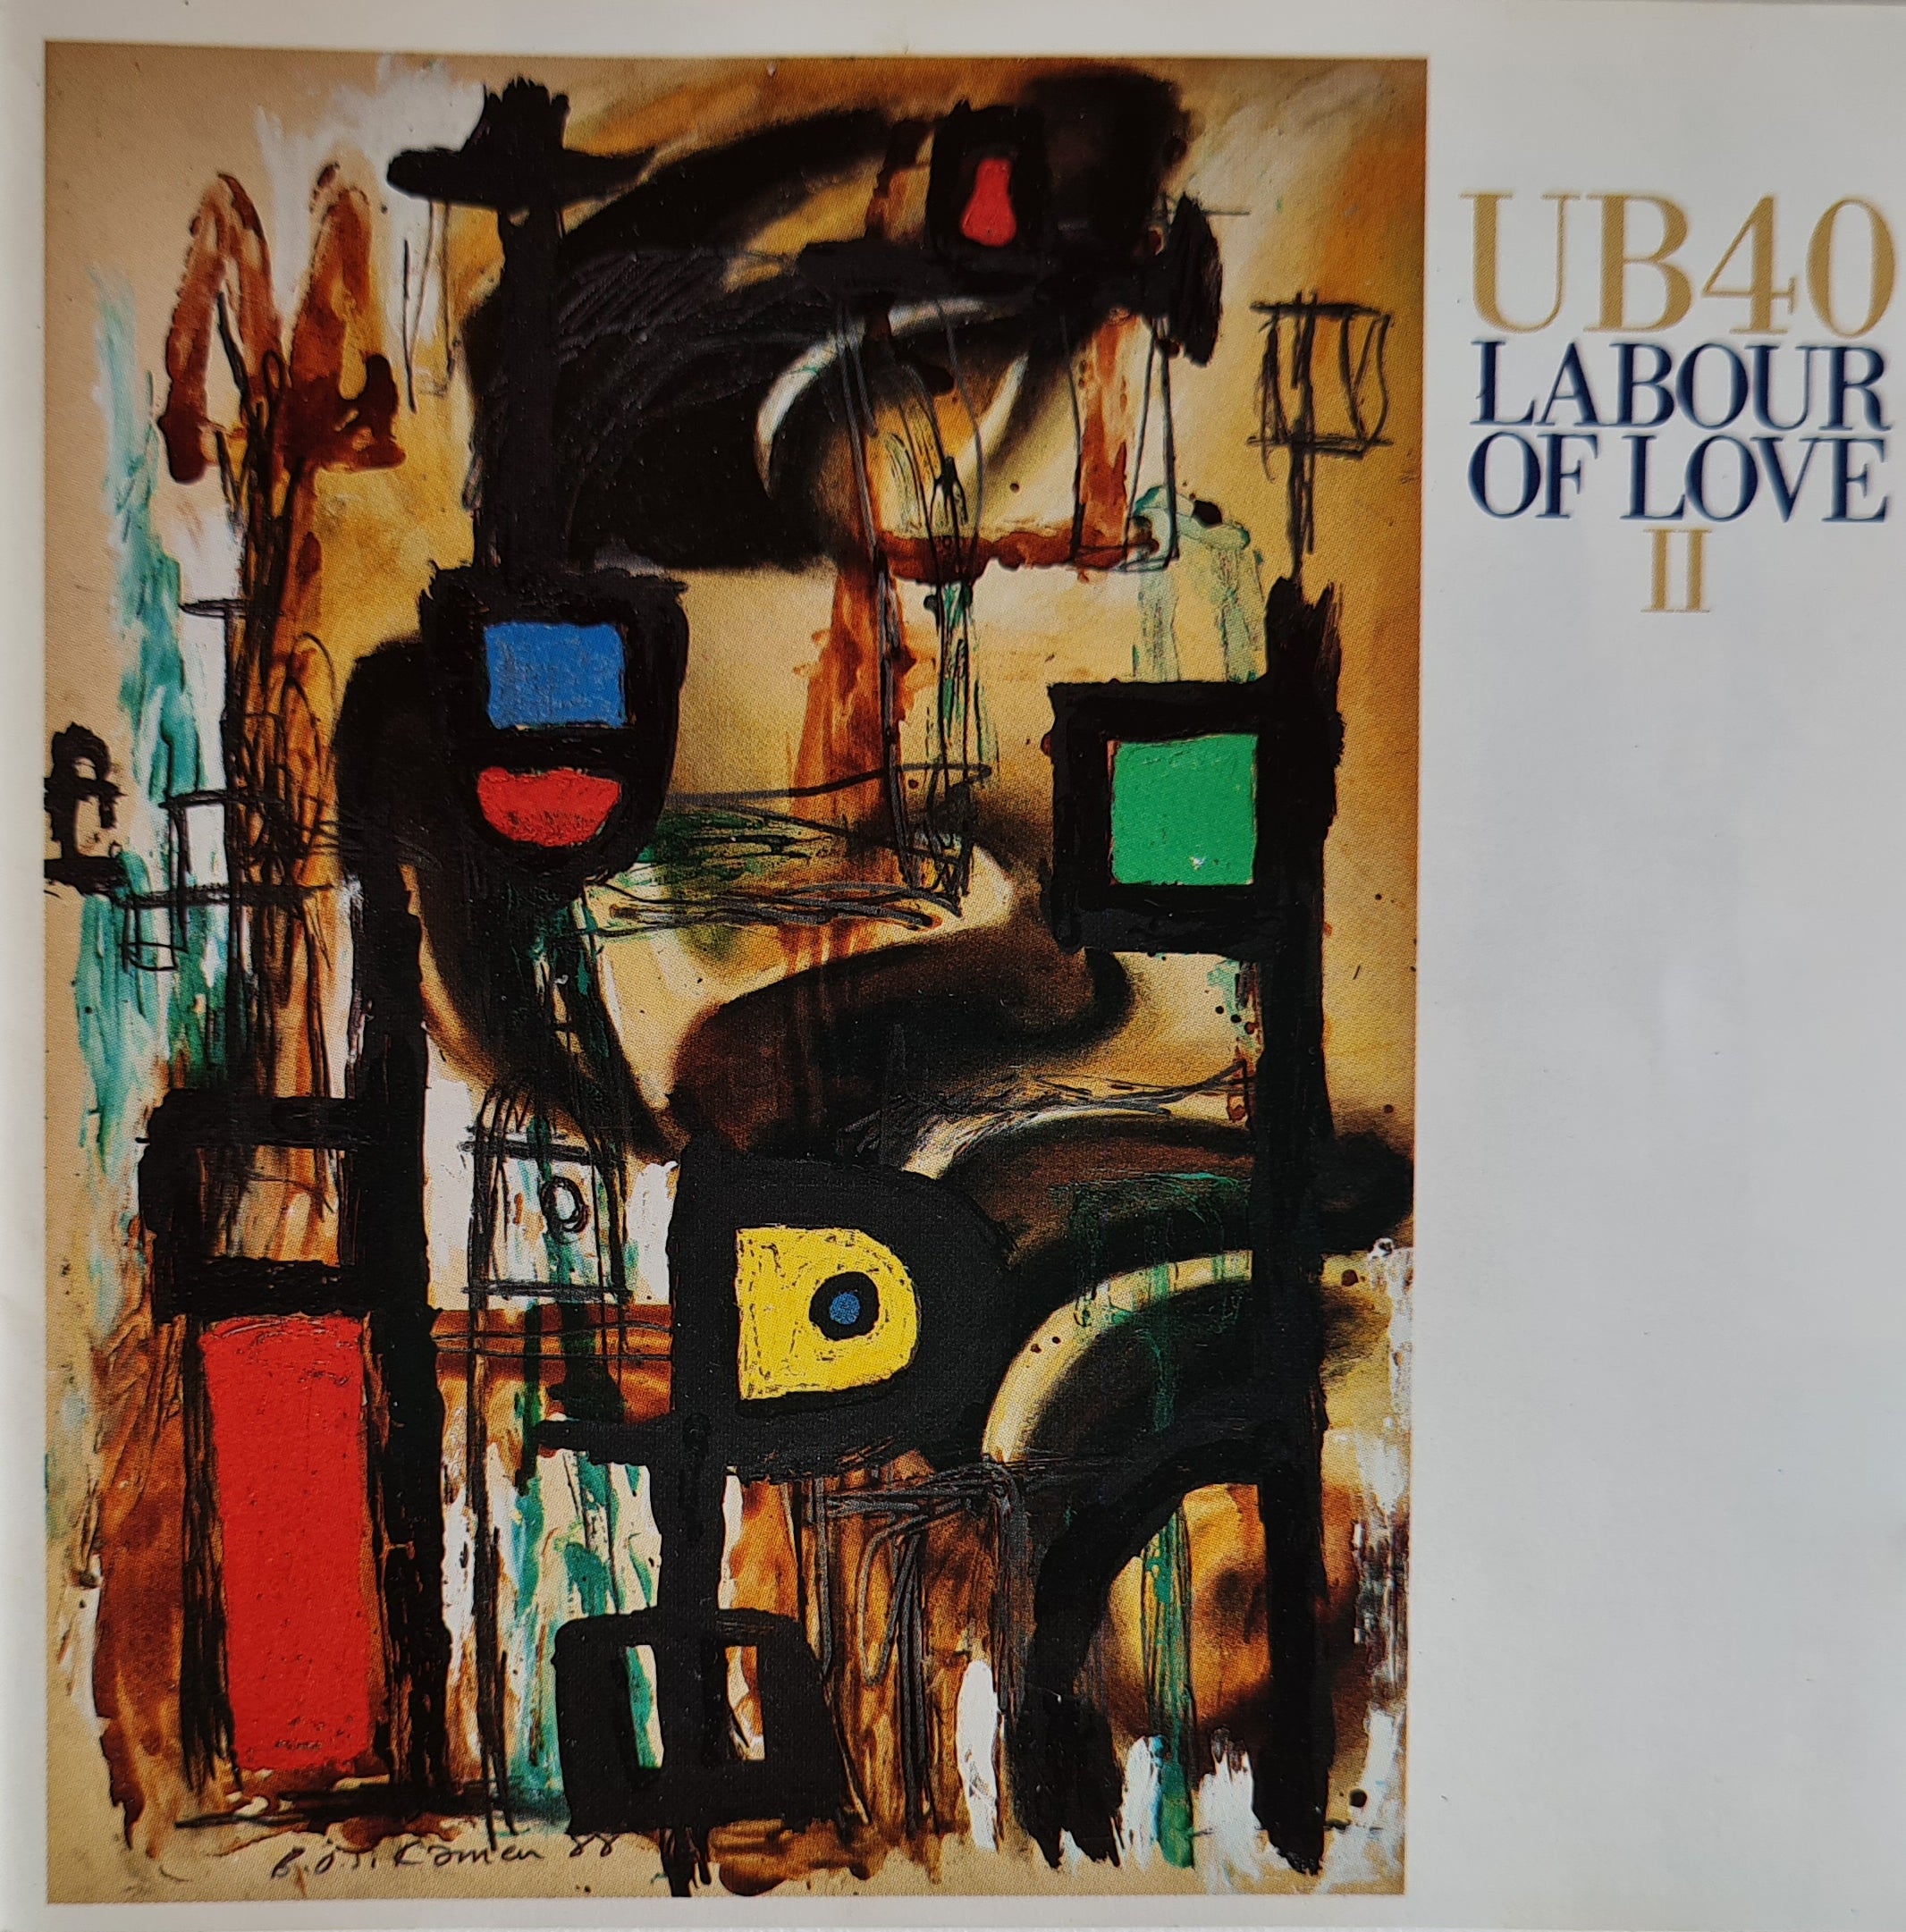 UB40 - Labour of Love II (CD)